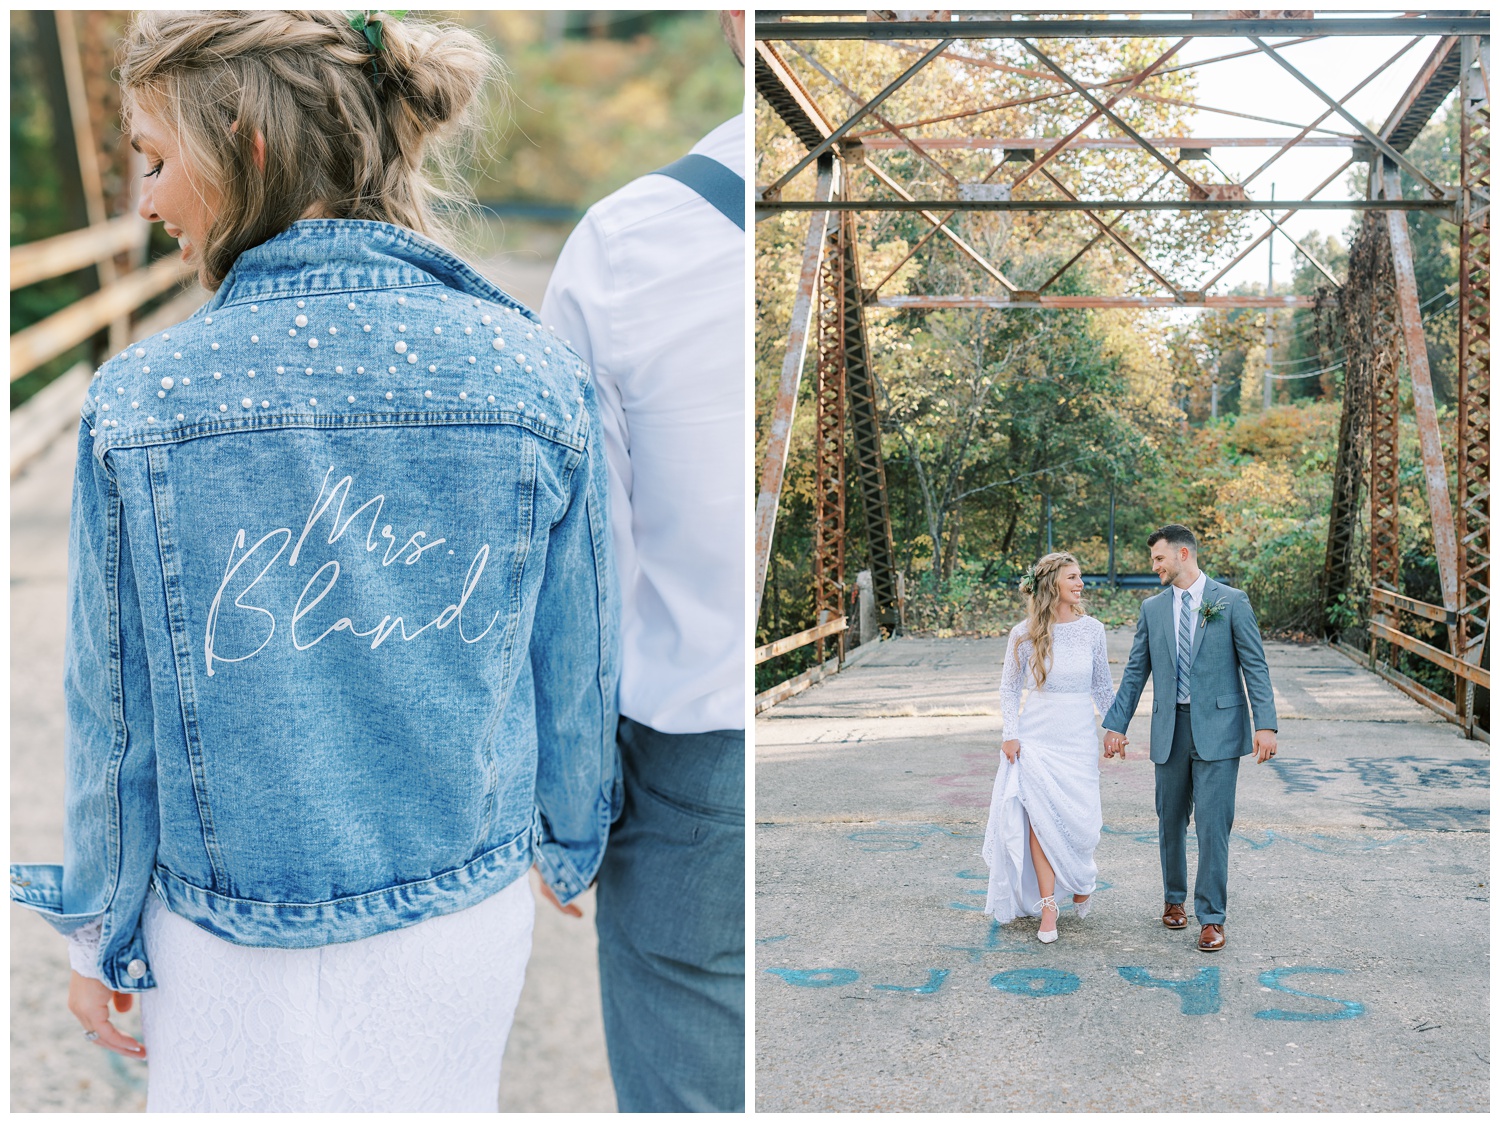 Bride wearing jean Mrs jacket and walking with groom